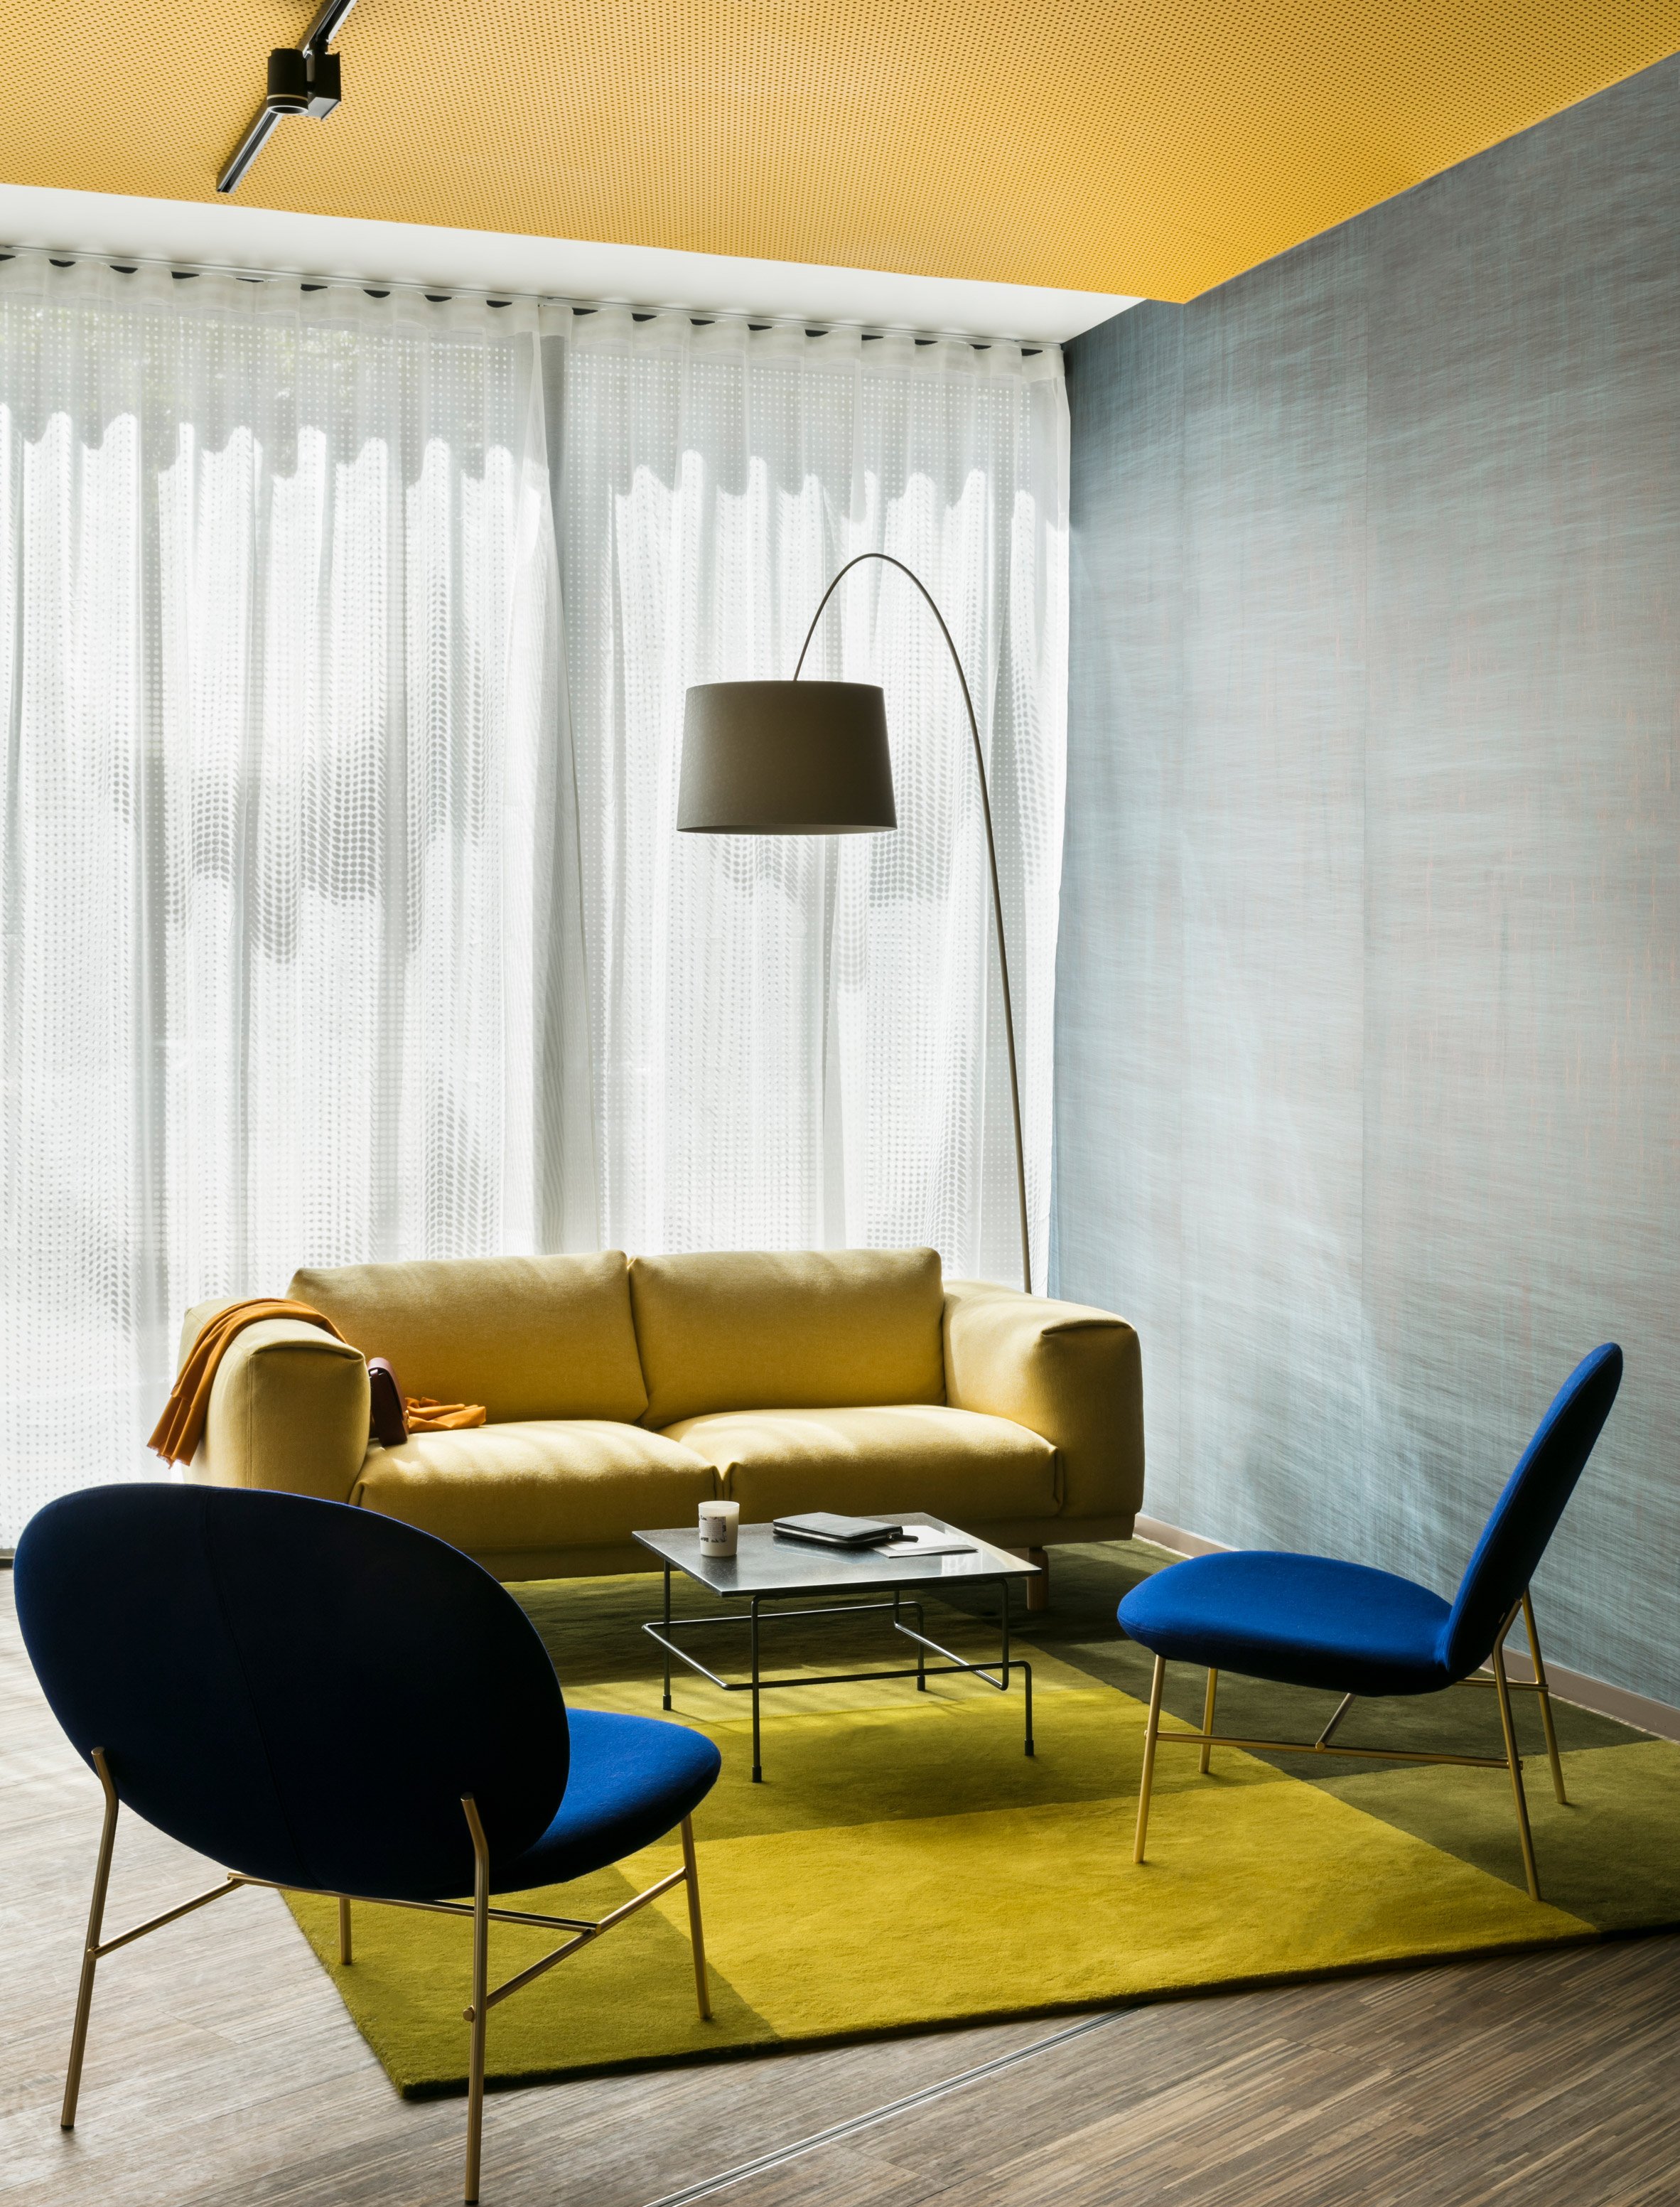 Patrick Norguet creates colourful communal spaces in latest Okko Hotel interior